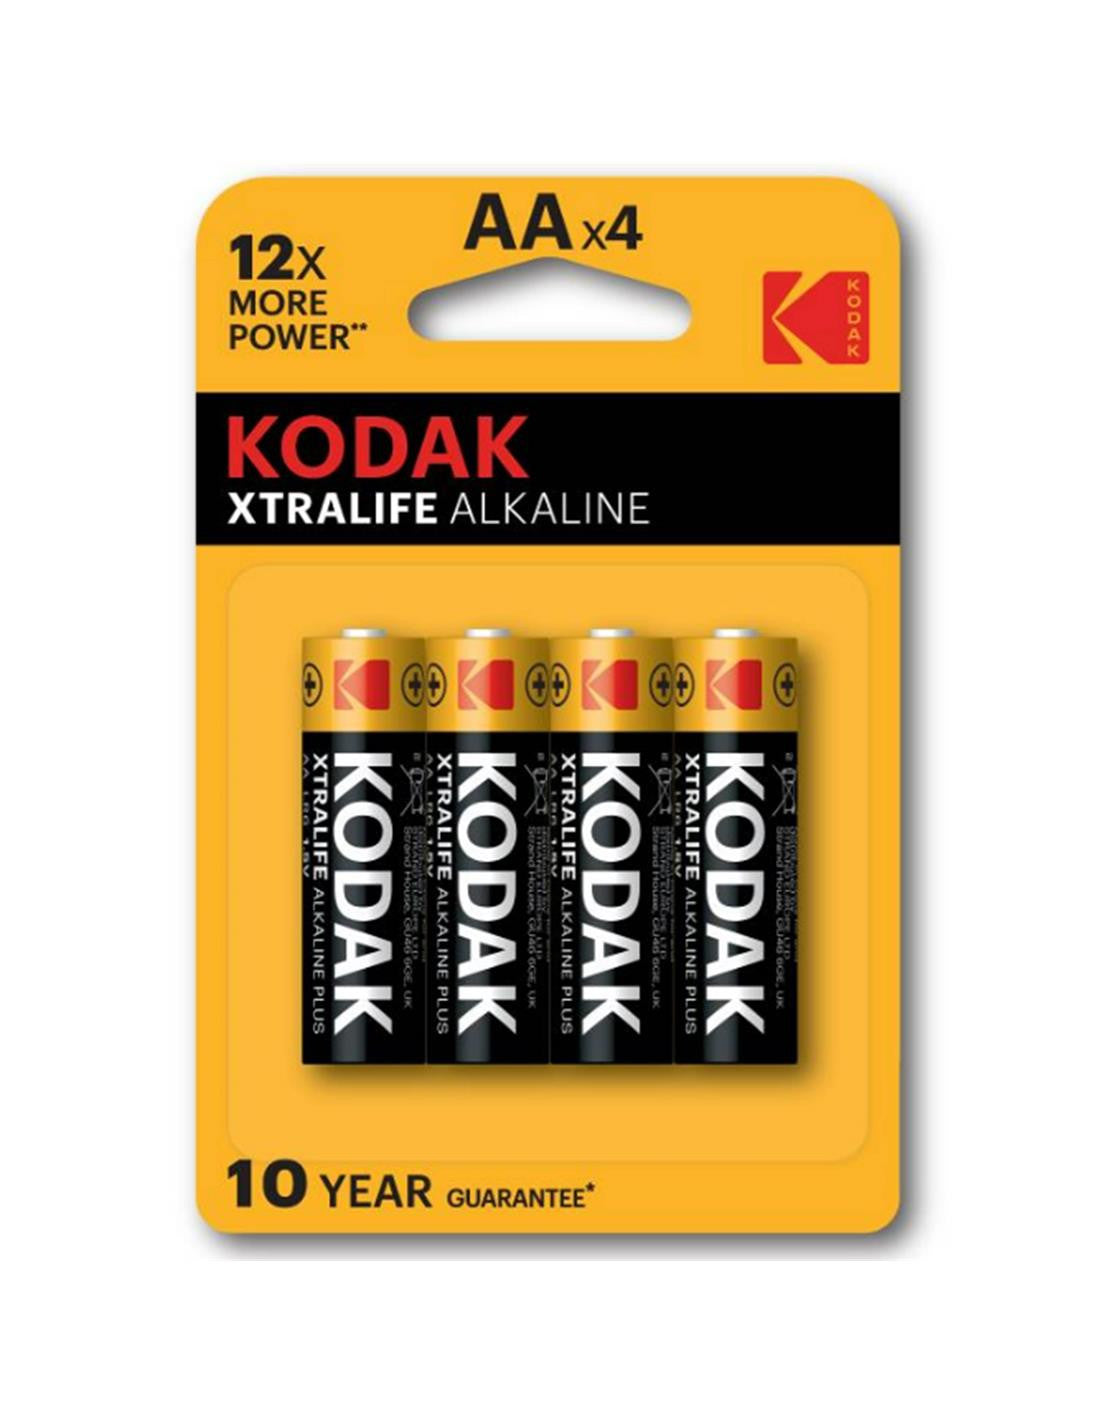 Kodak Xtralife Alkaline AA batteries x 4